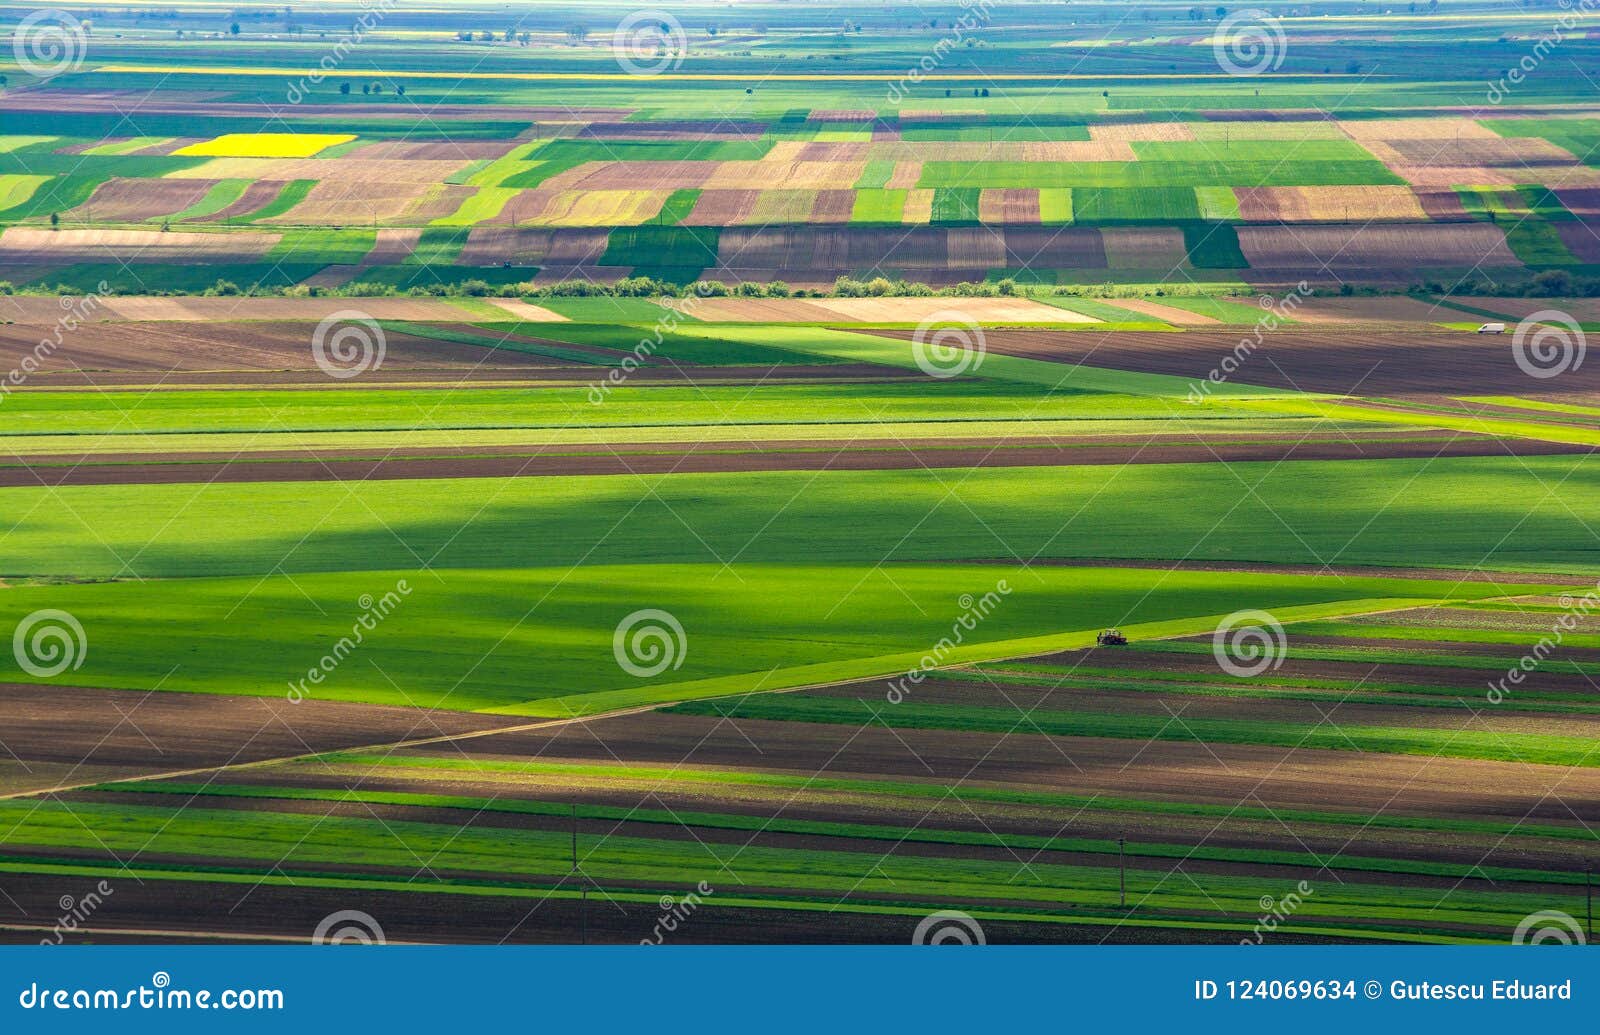 transylvania aerial view over crops fields in romania